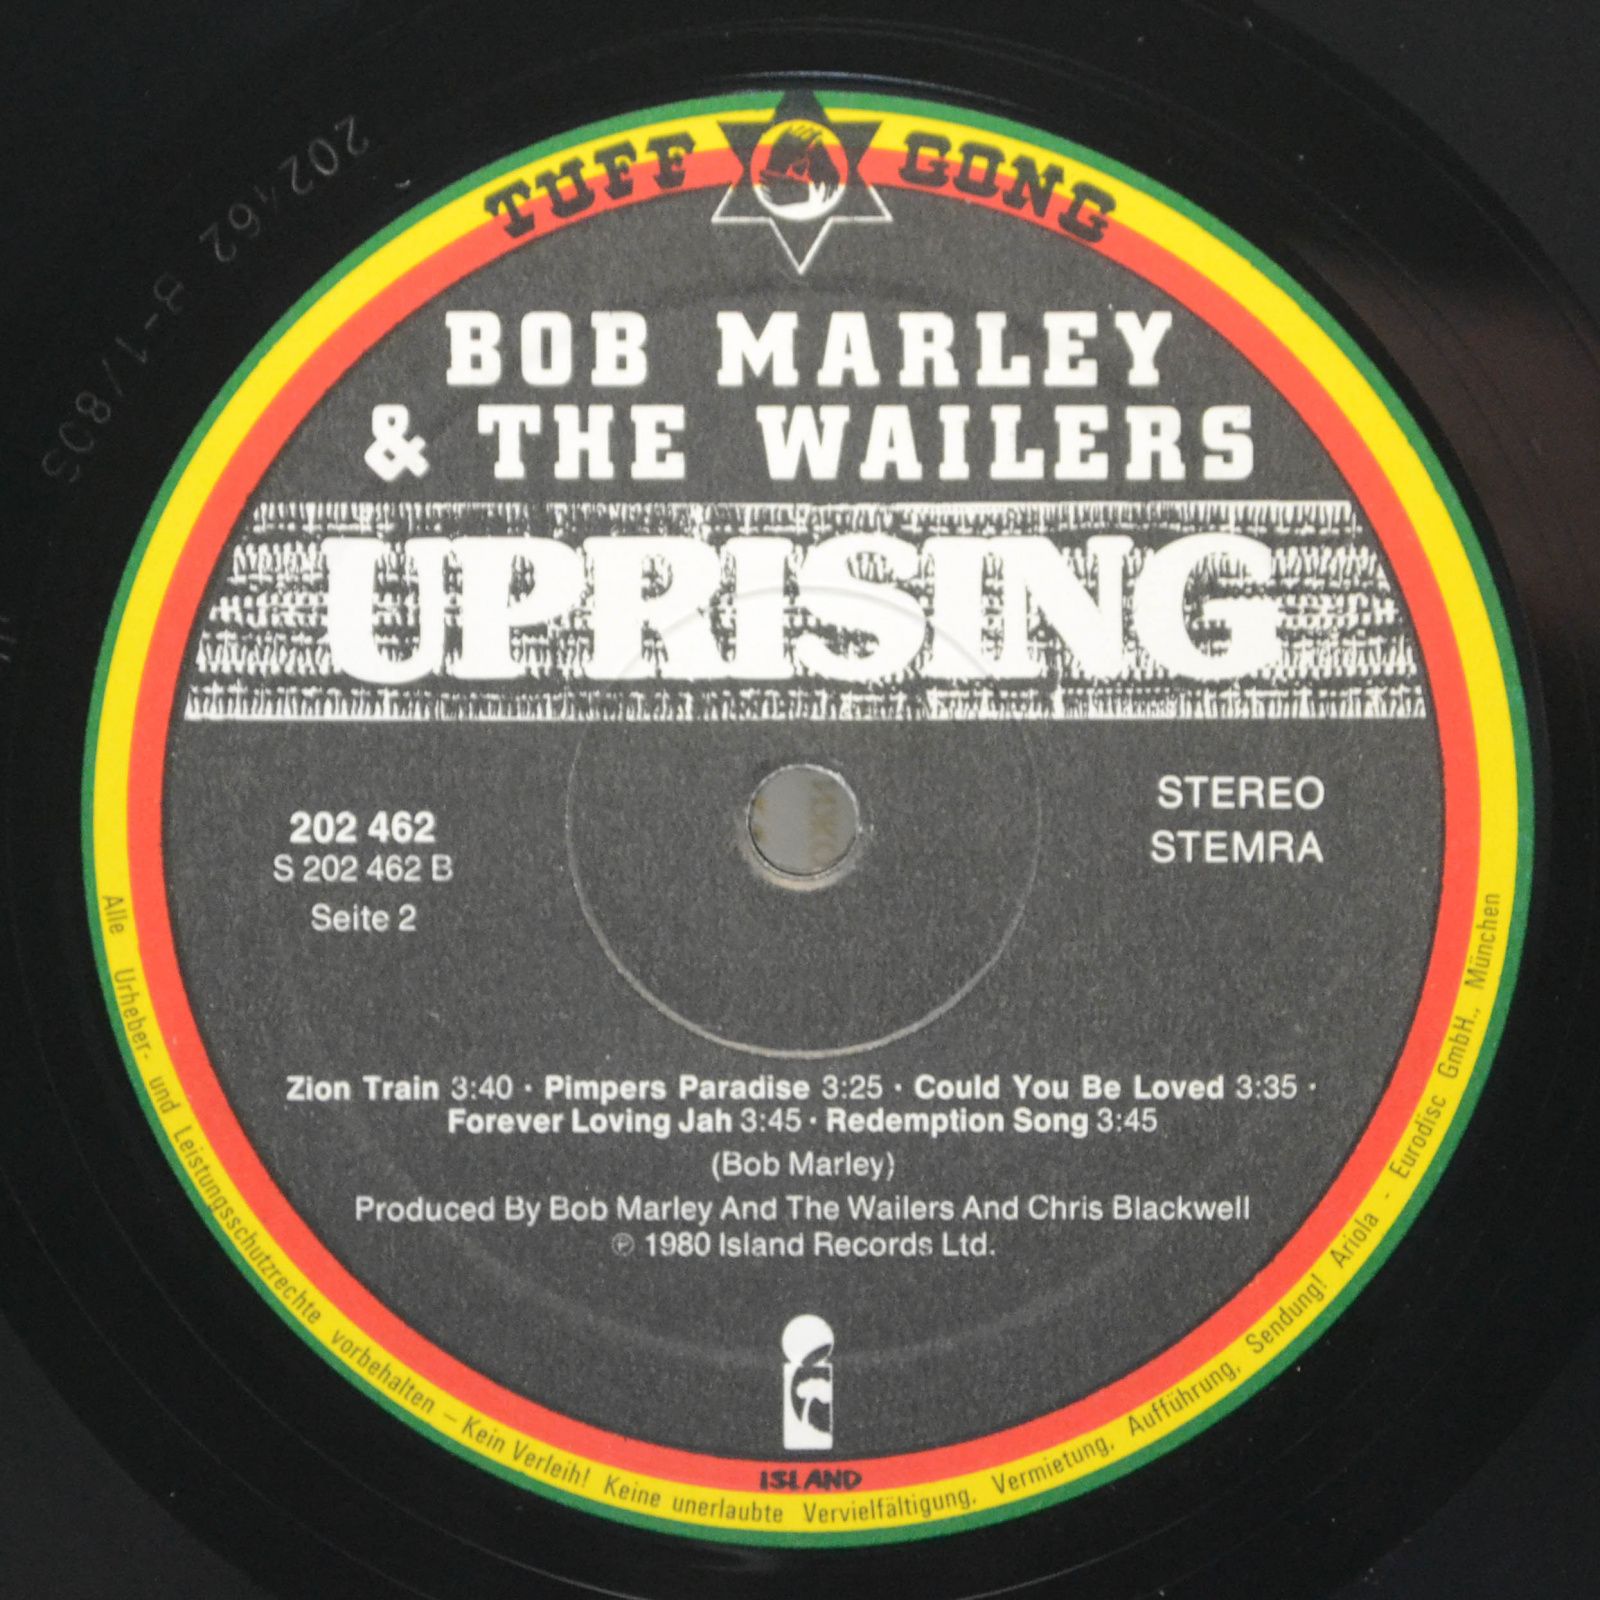 Bob Marley & The Wailers — Uprising, 1980